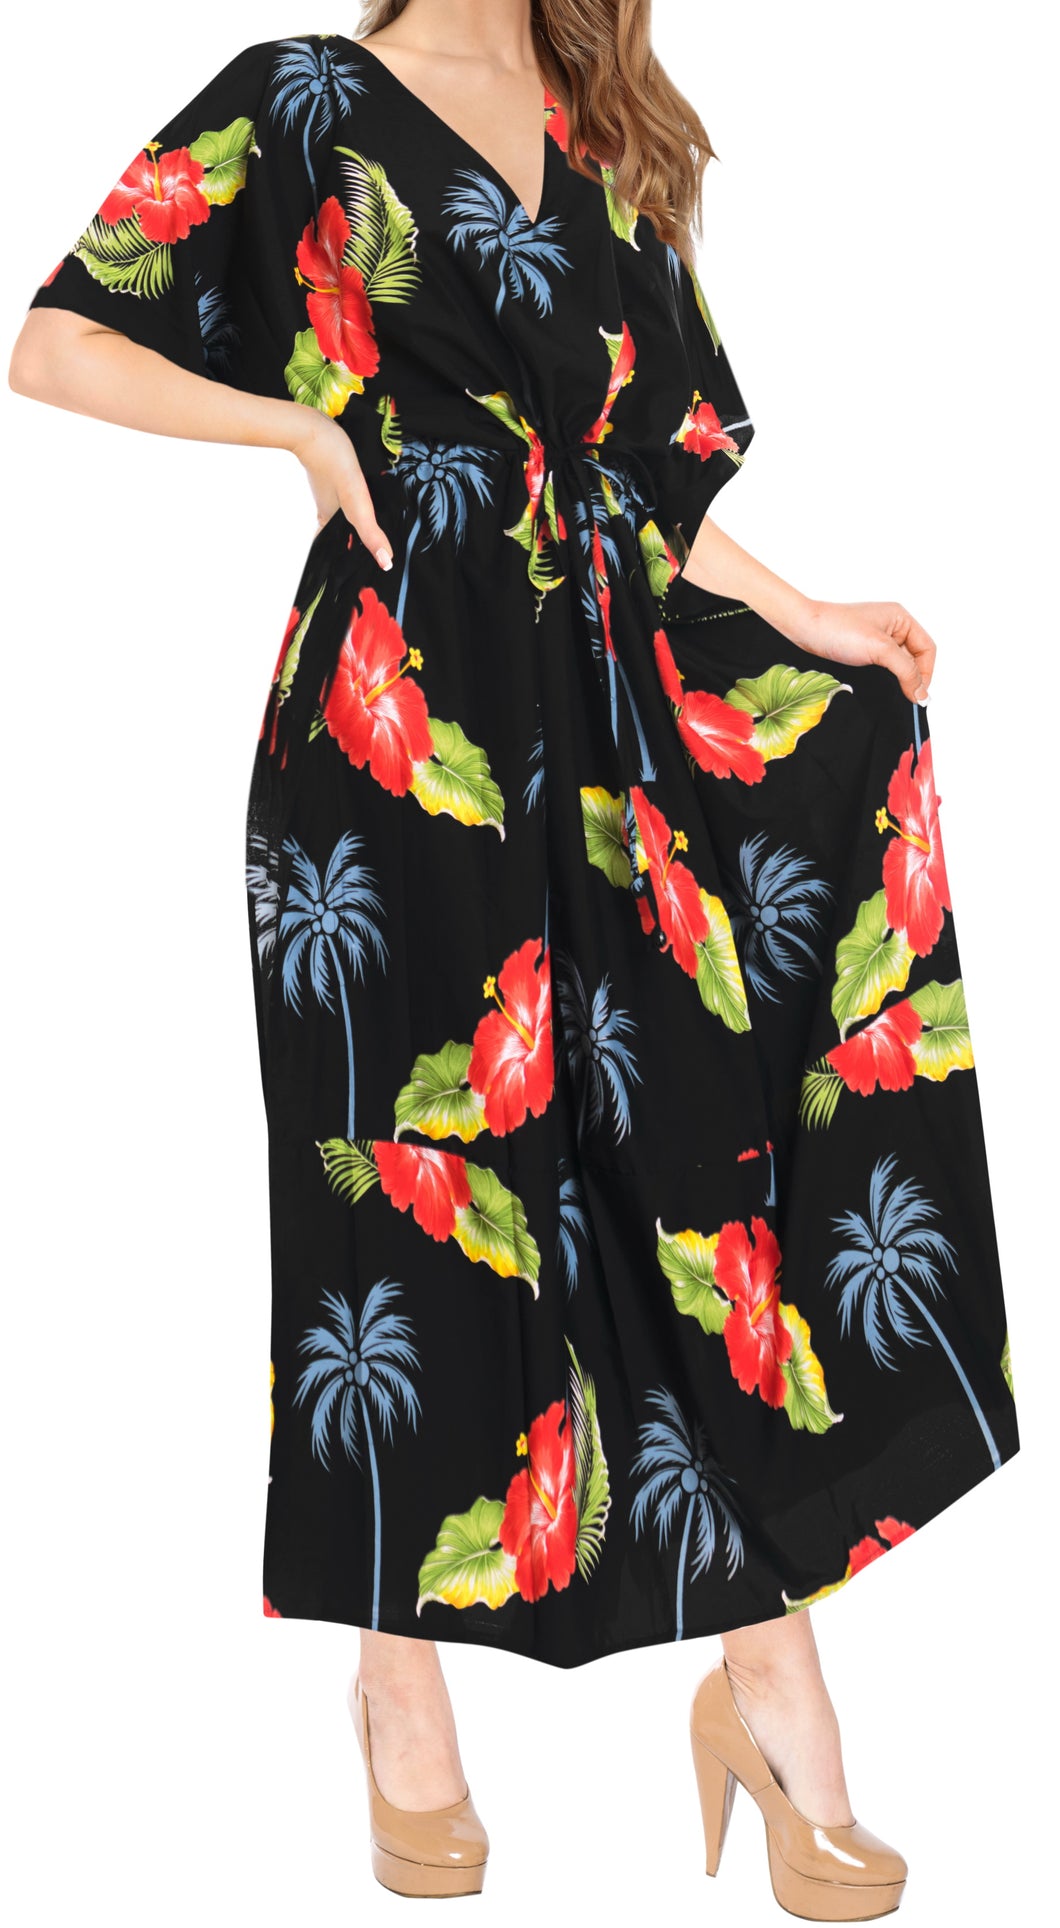 LA LEELA Women's Kaftan Nightgown Lounge Dress Sleepwear Cover Ups Black Floral Printed